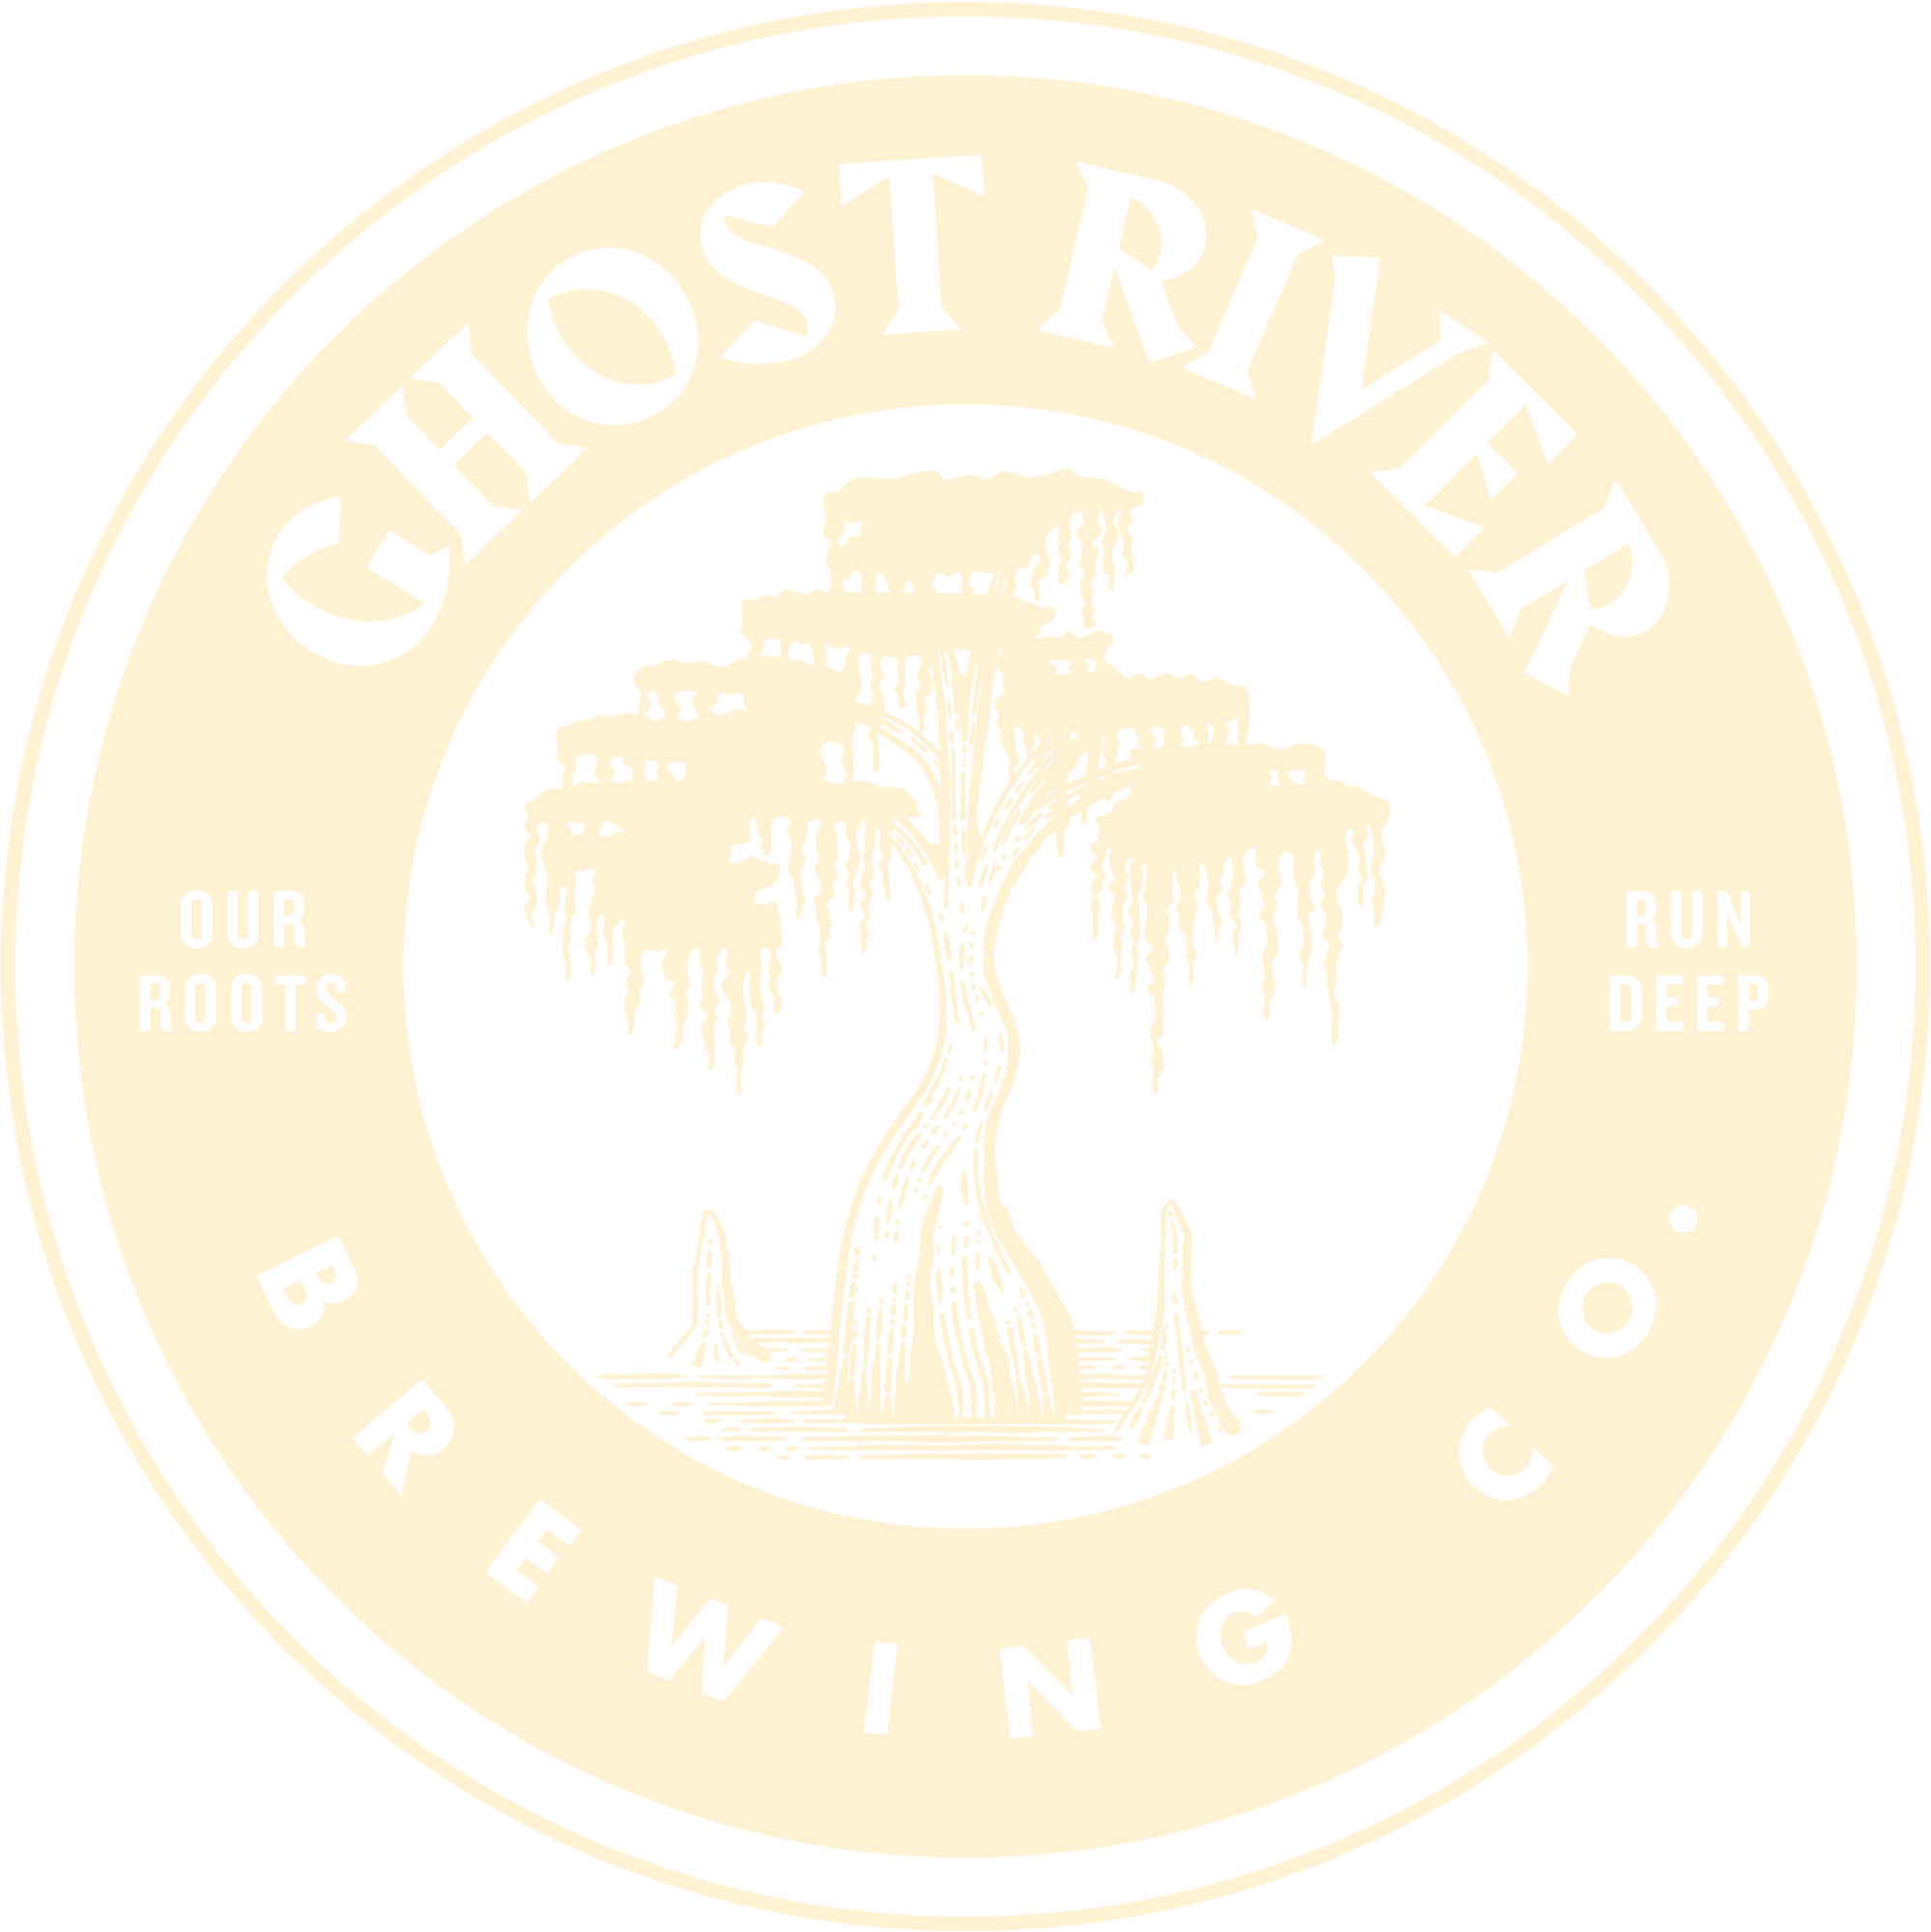 Ghost River Brewing Co logo tan